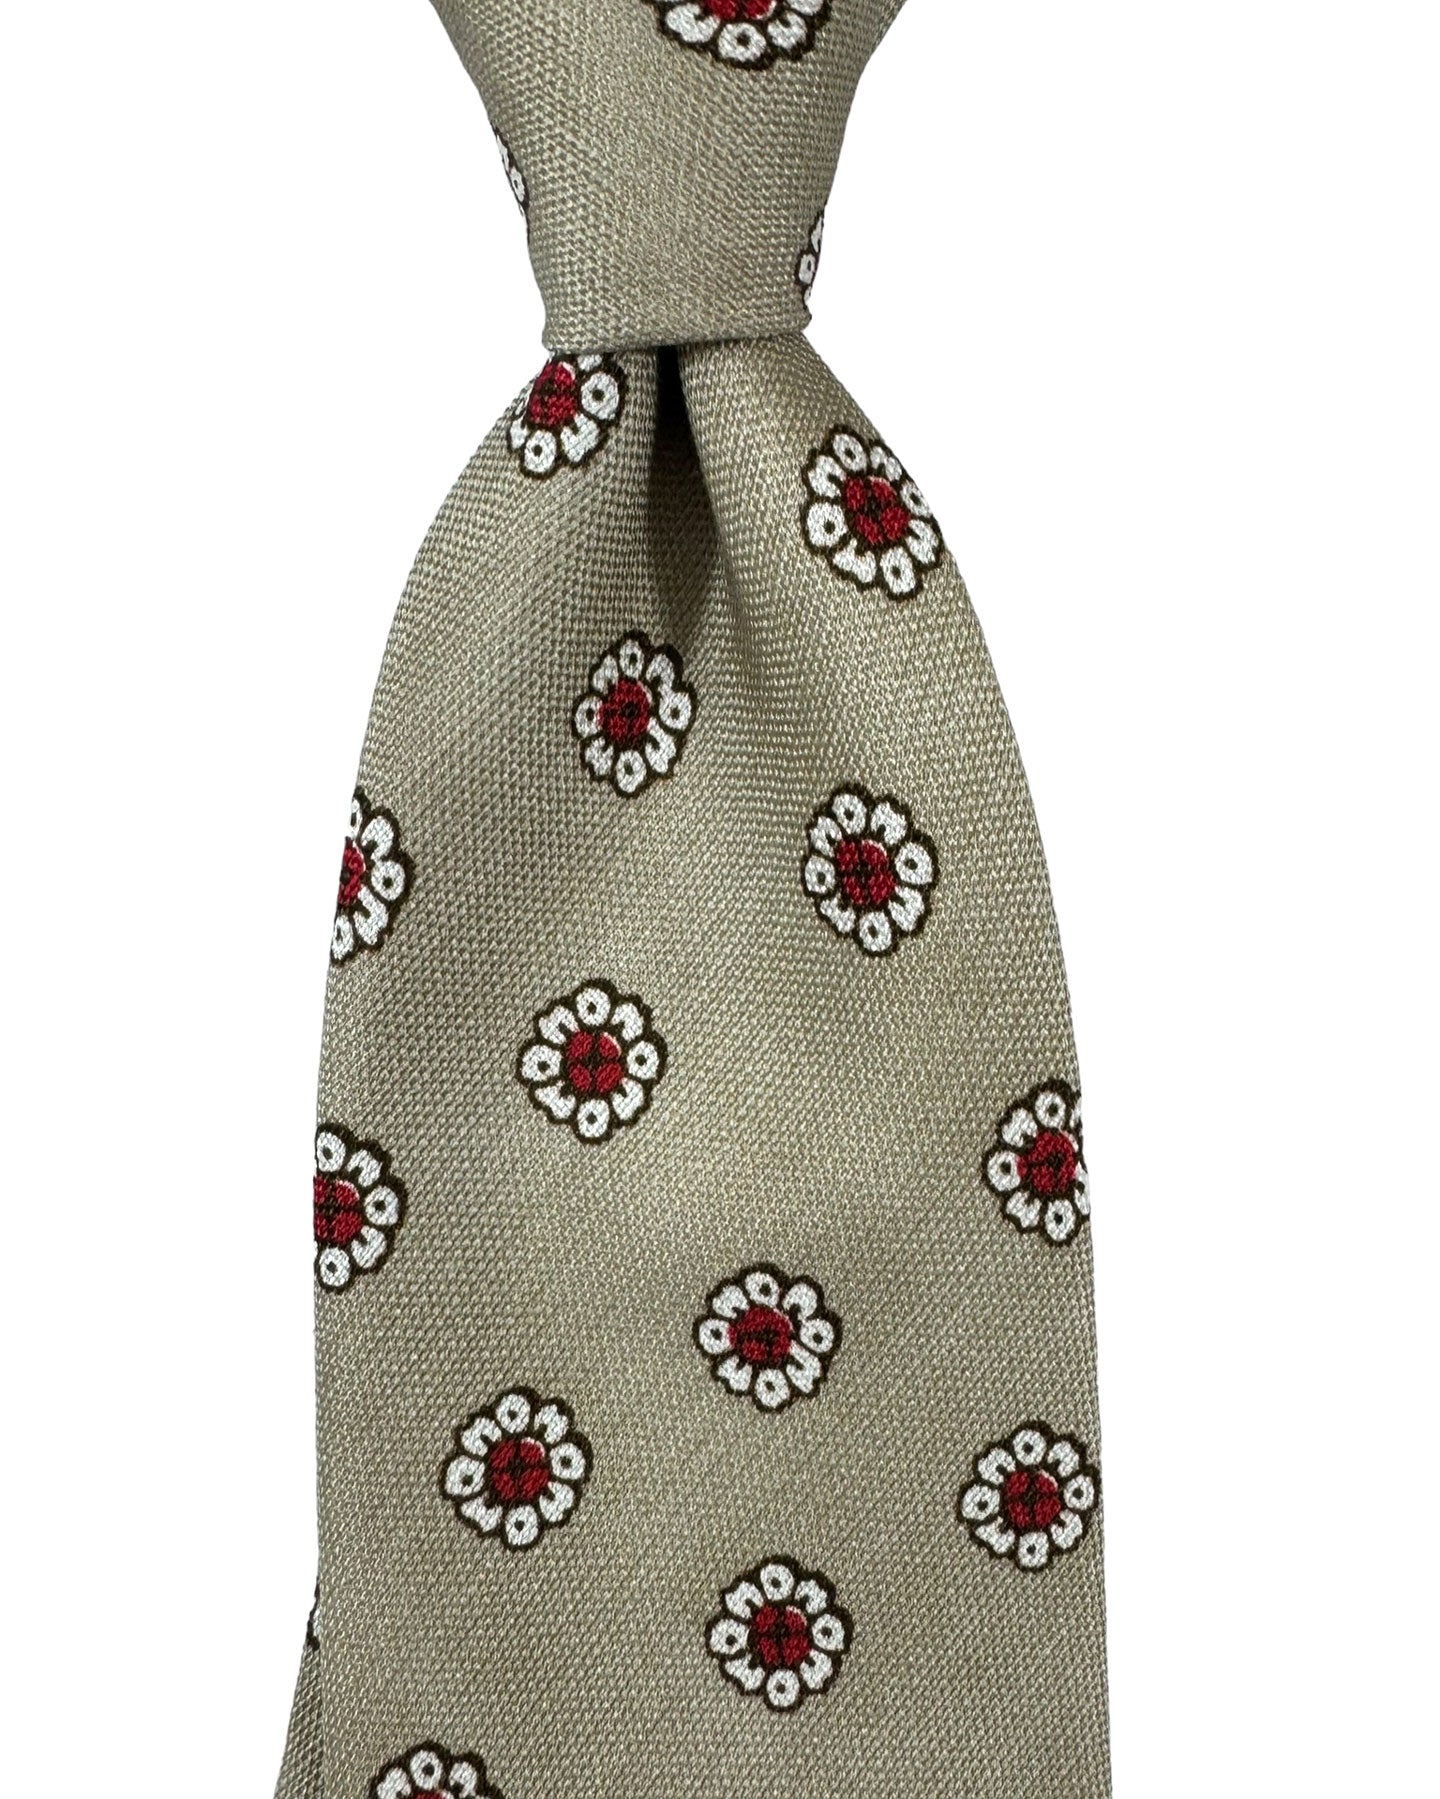 Barba Sevenfold Tie Beige Red Floral Design - Sartorial